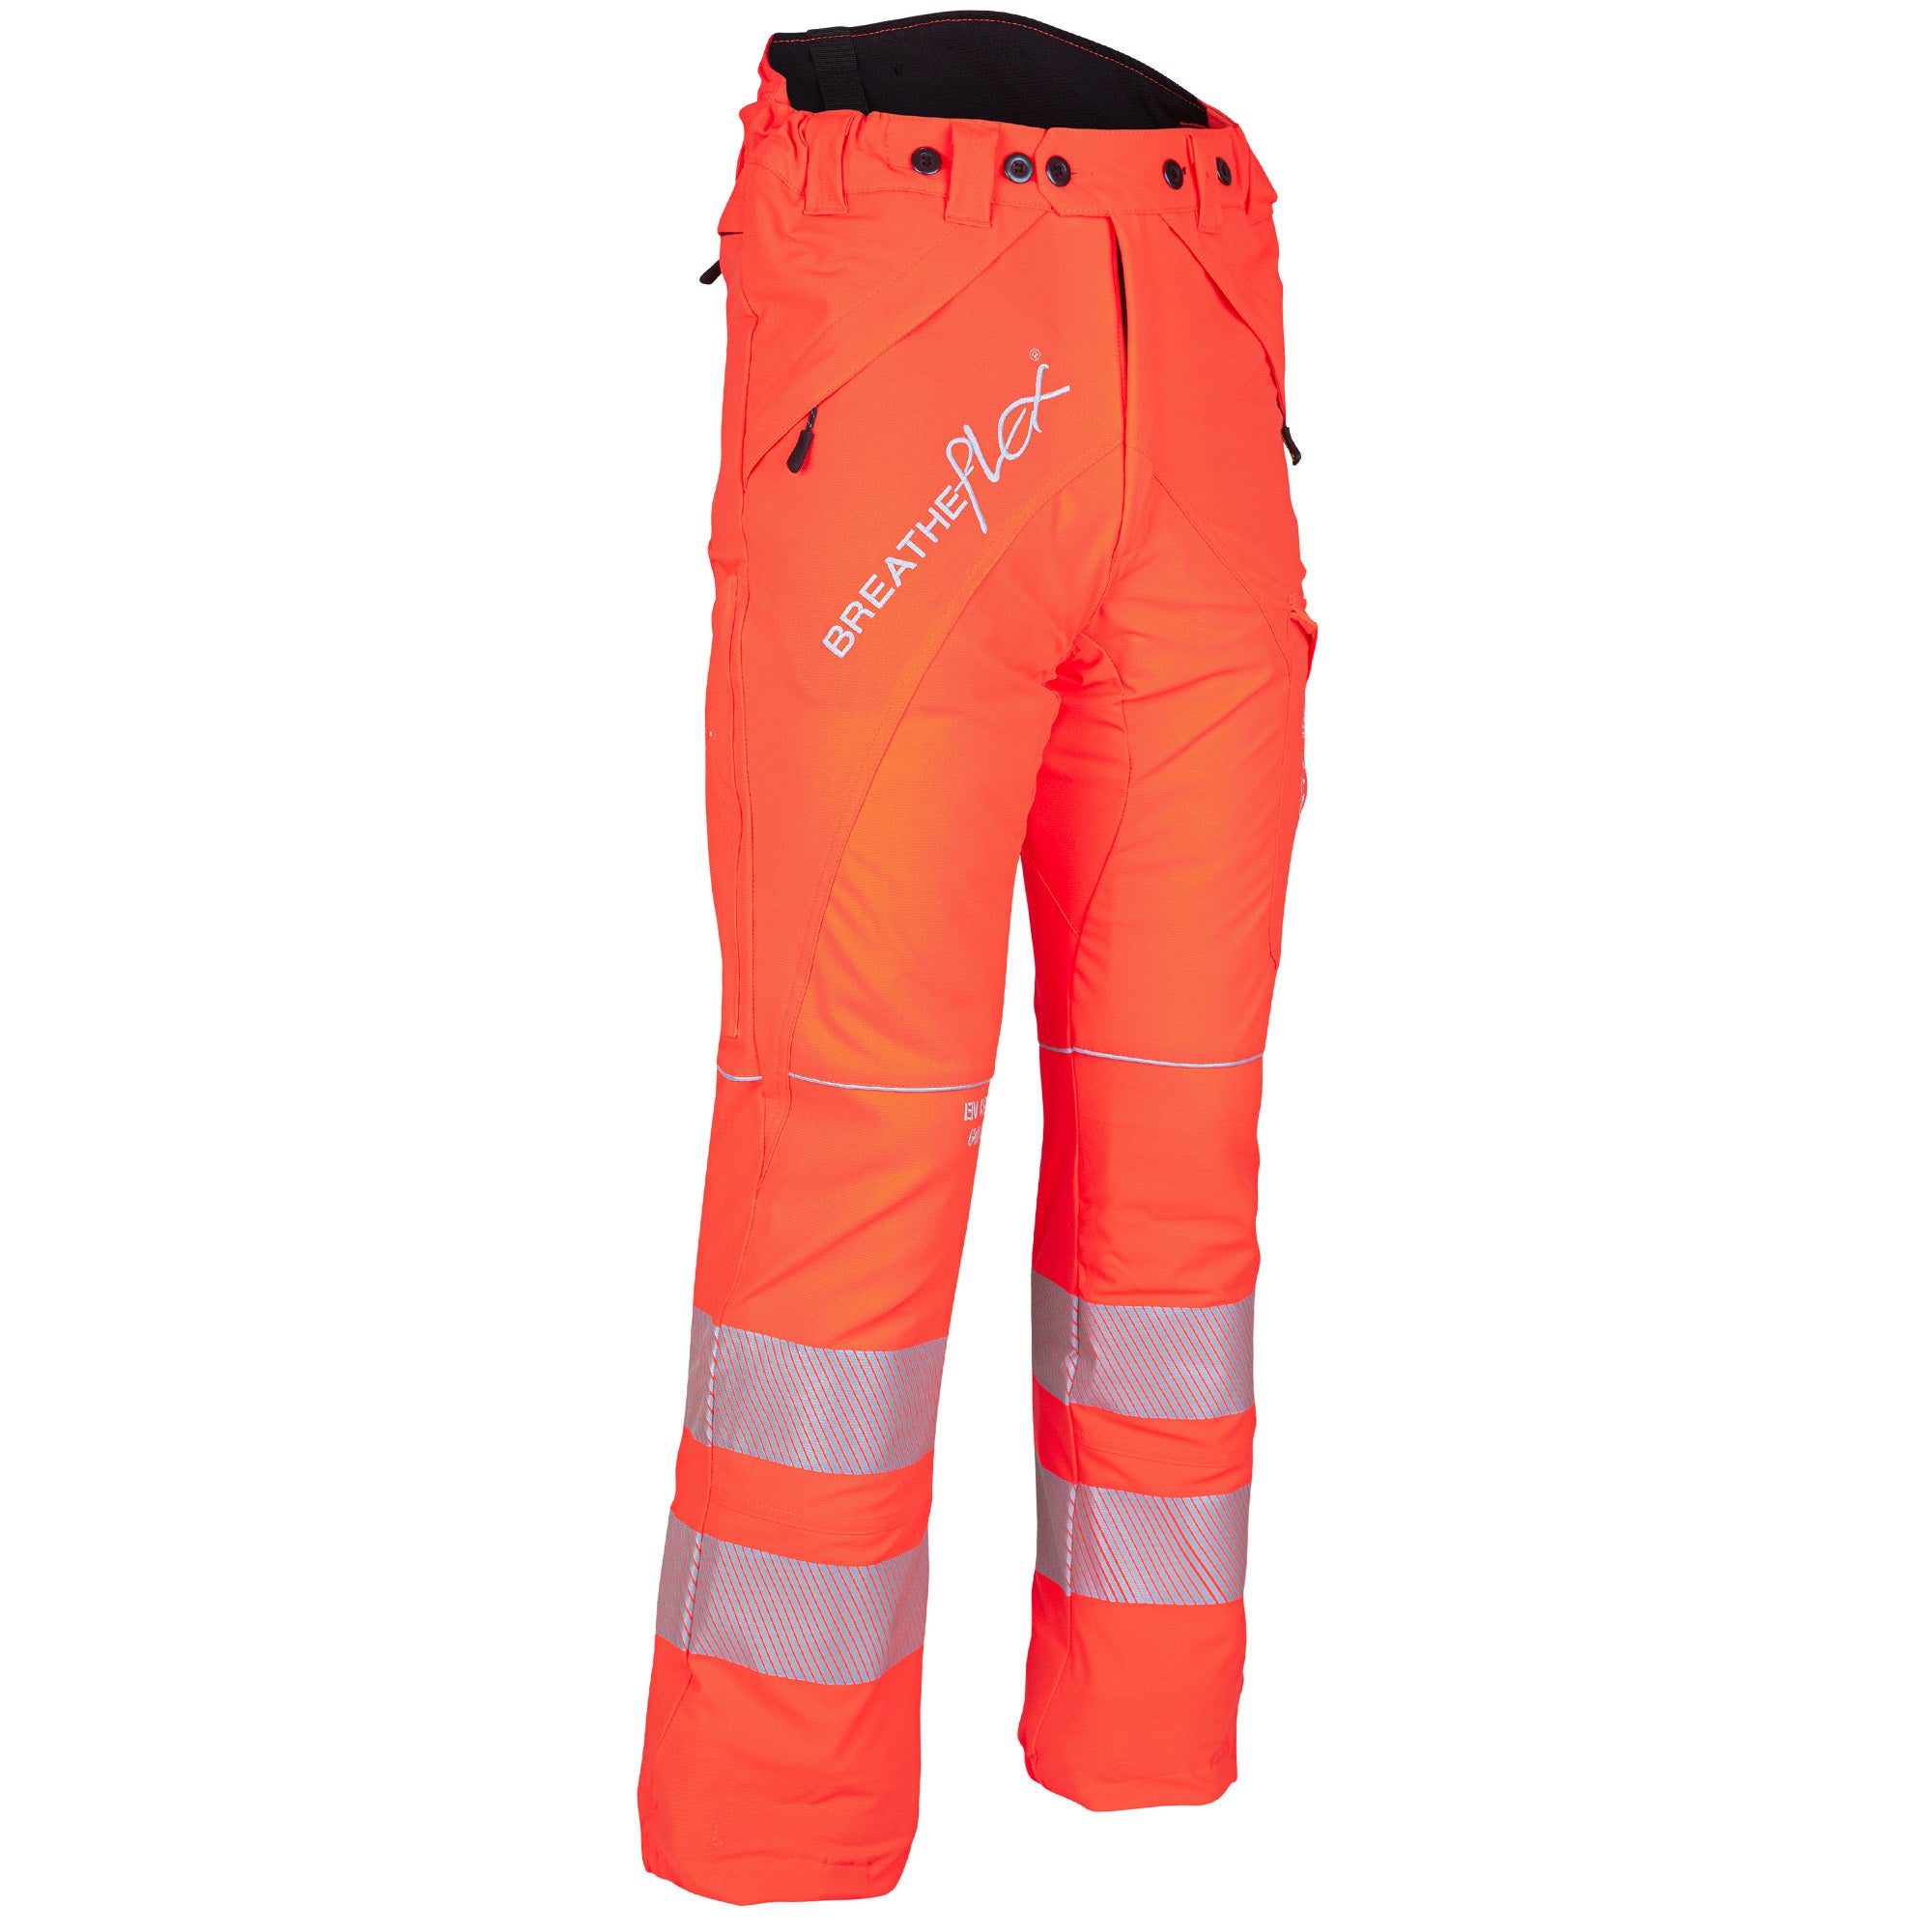 ATHV4050/4040/4035 Breatheflex Chainsaw Trousers Design C Class 1/2/3 - Hi-Vis Orange